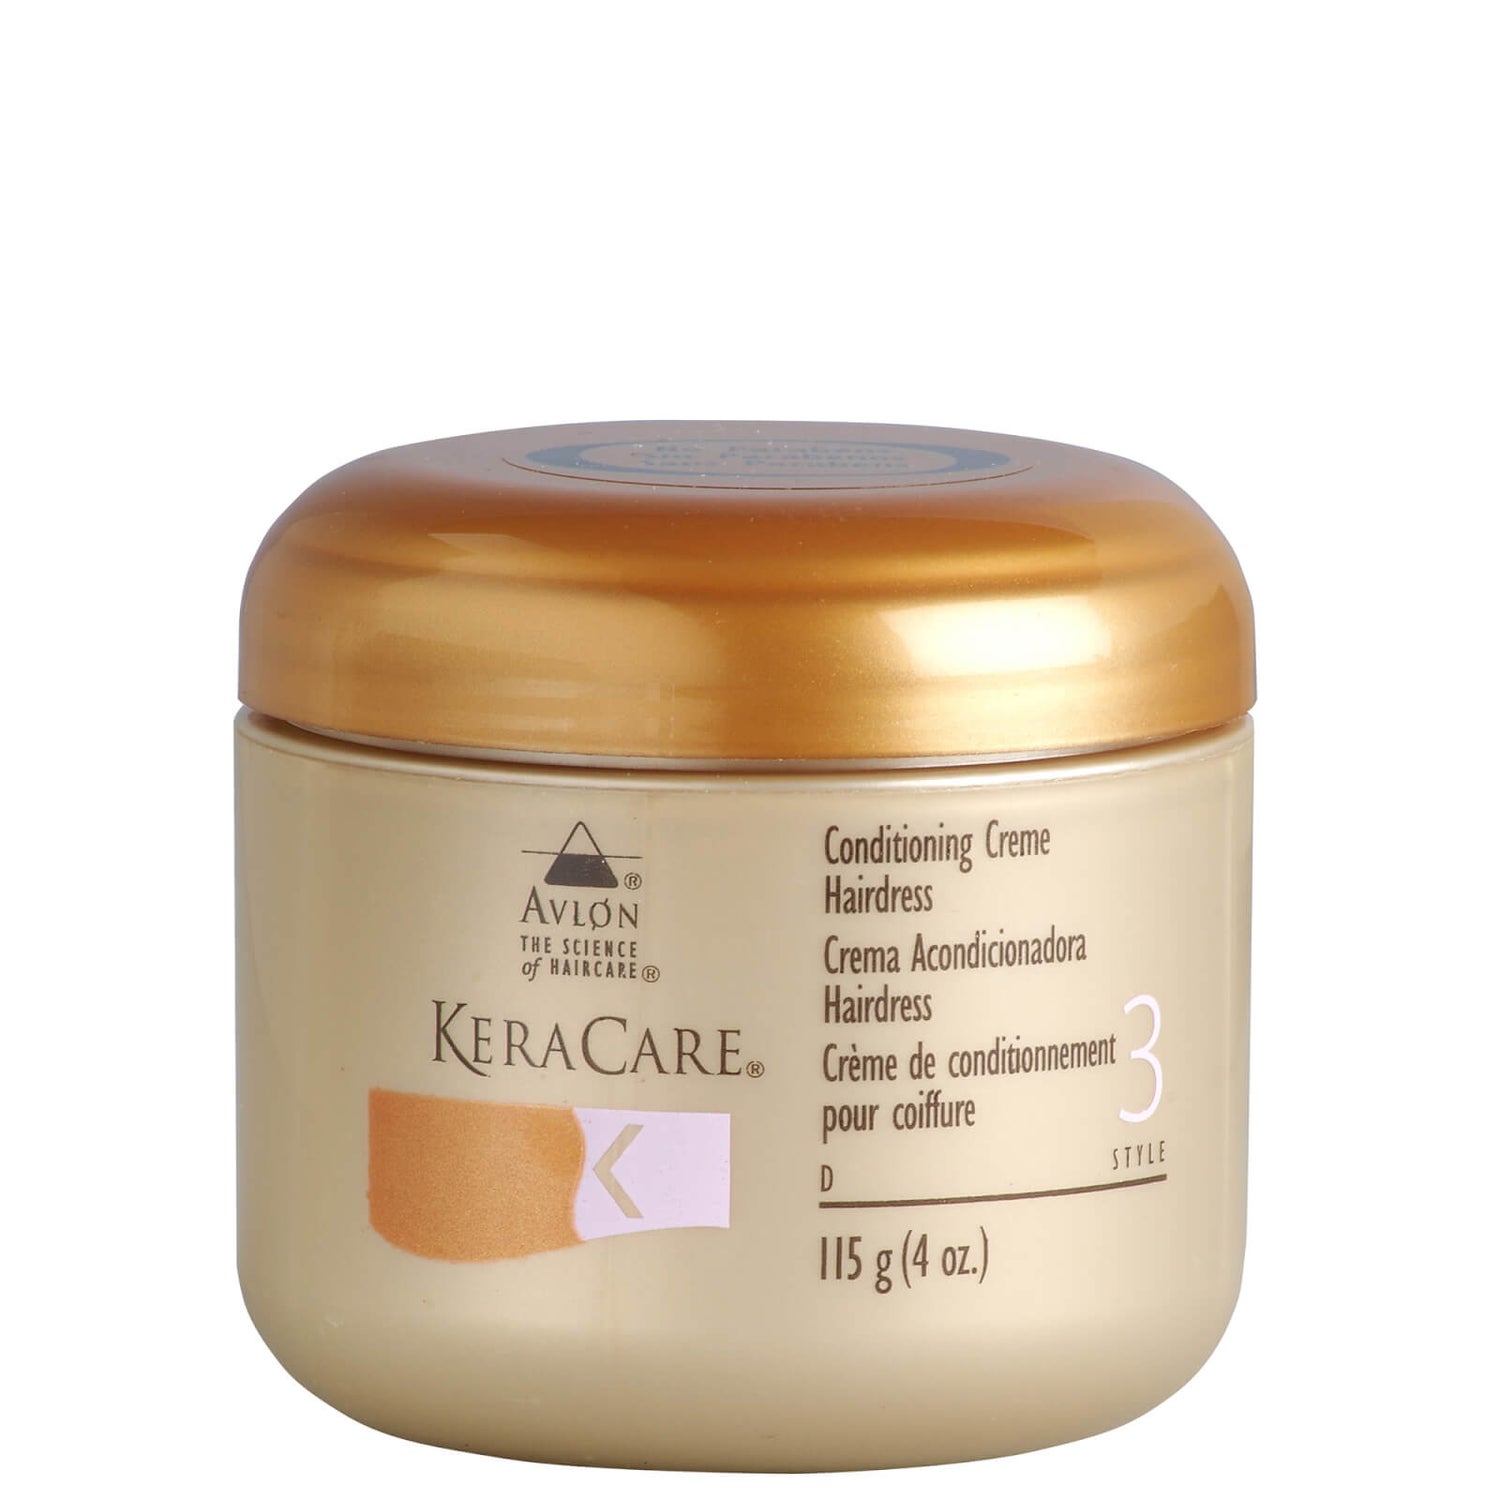 KeraCare Crème Hairdress (115g)